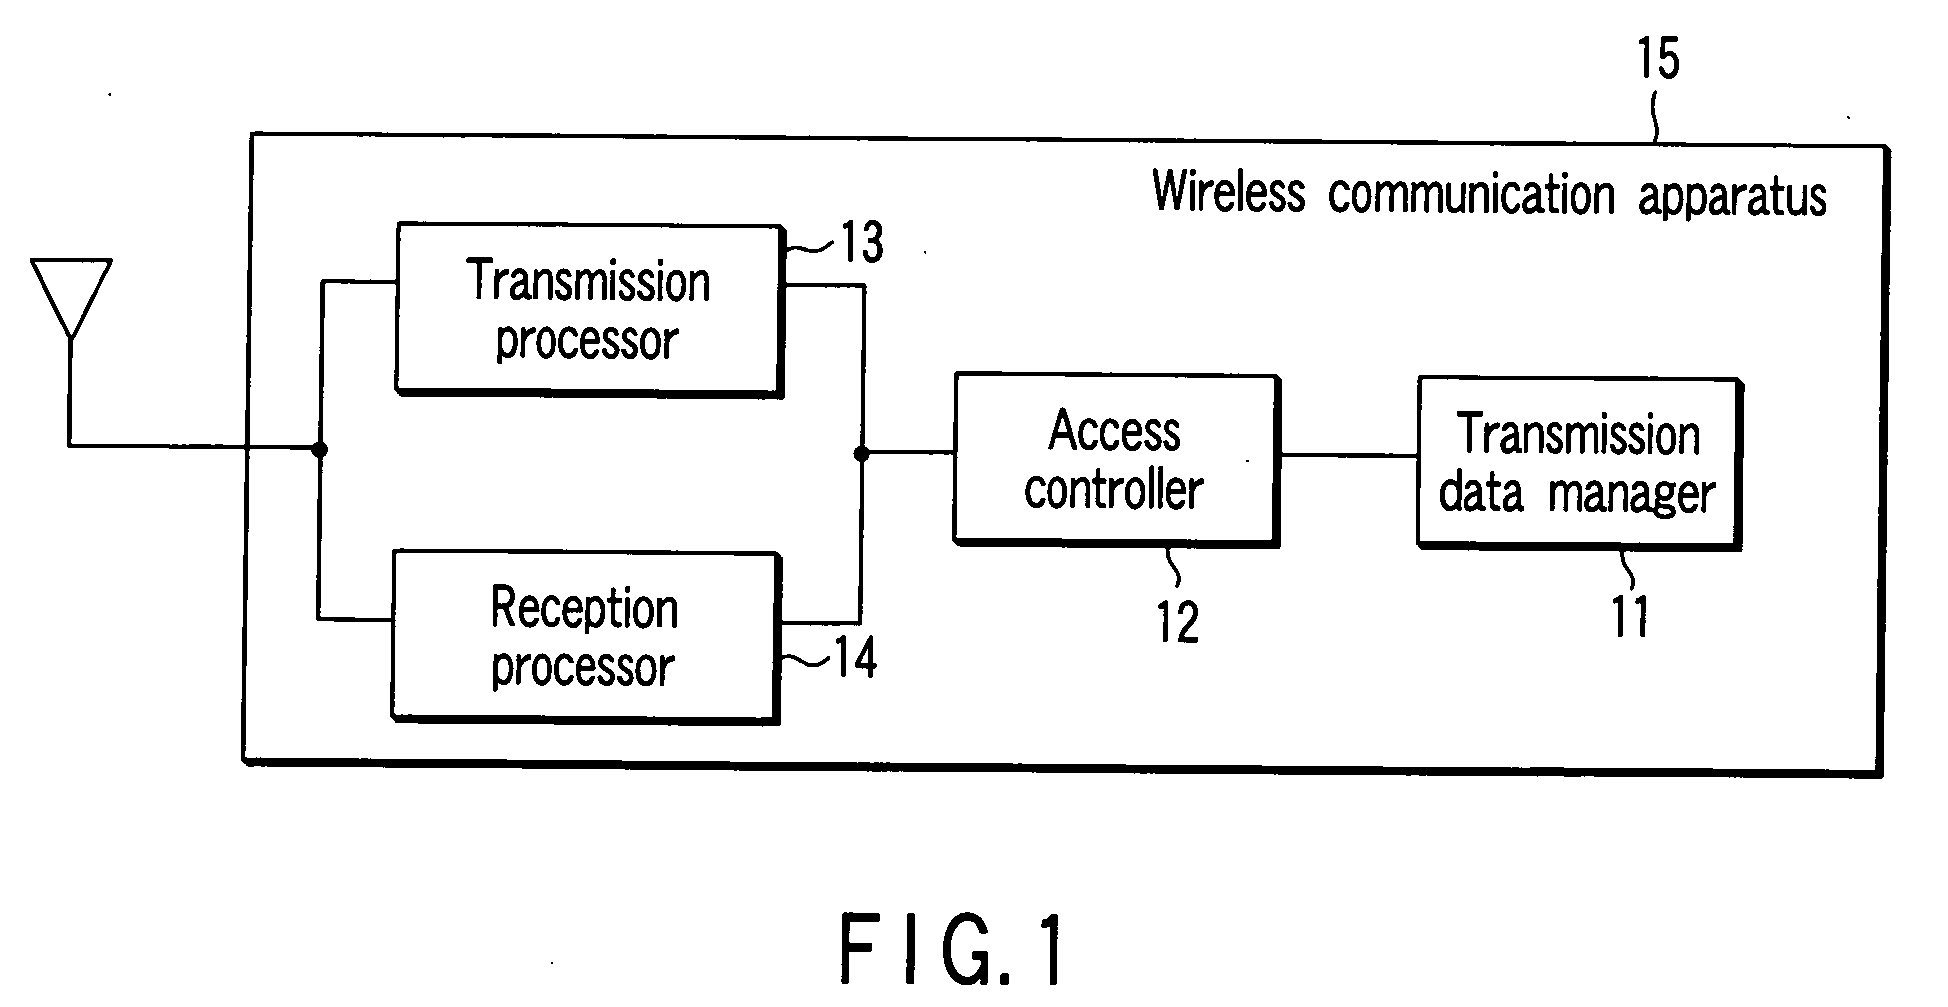 Wireless communication apparatus